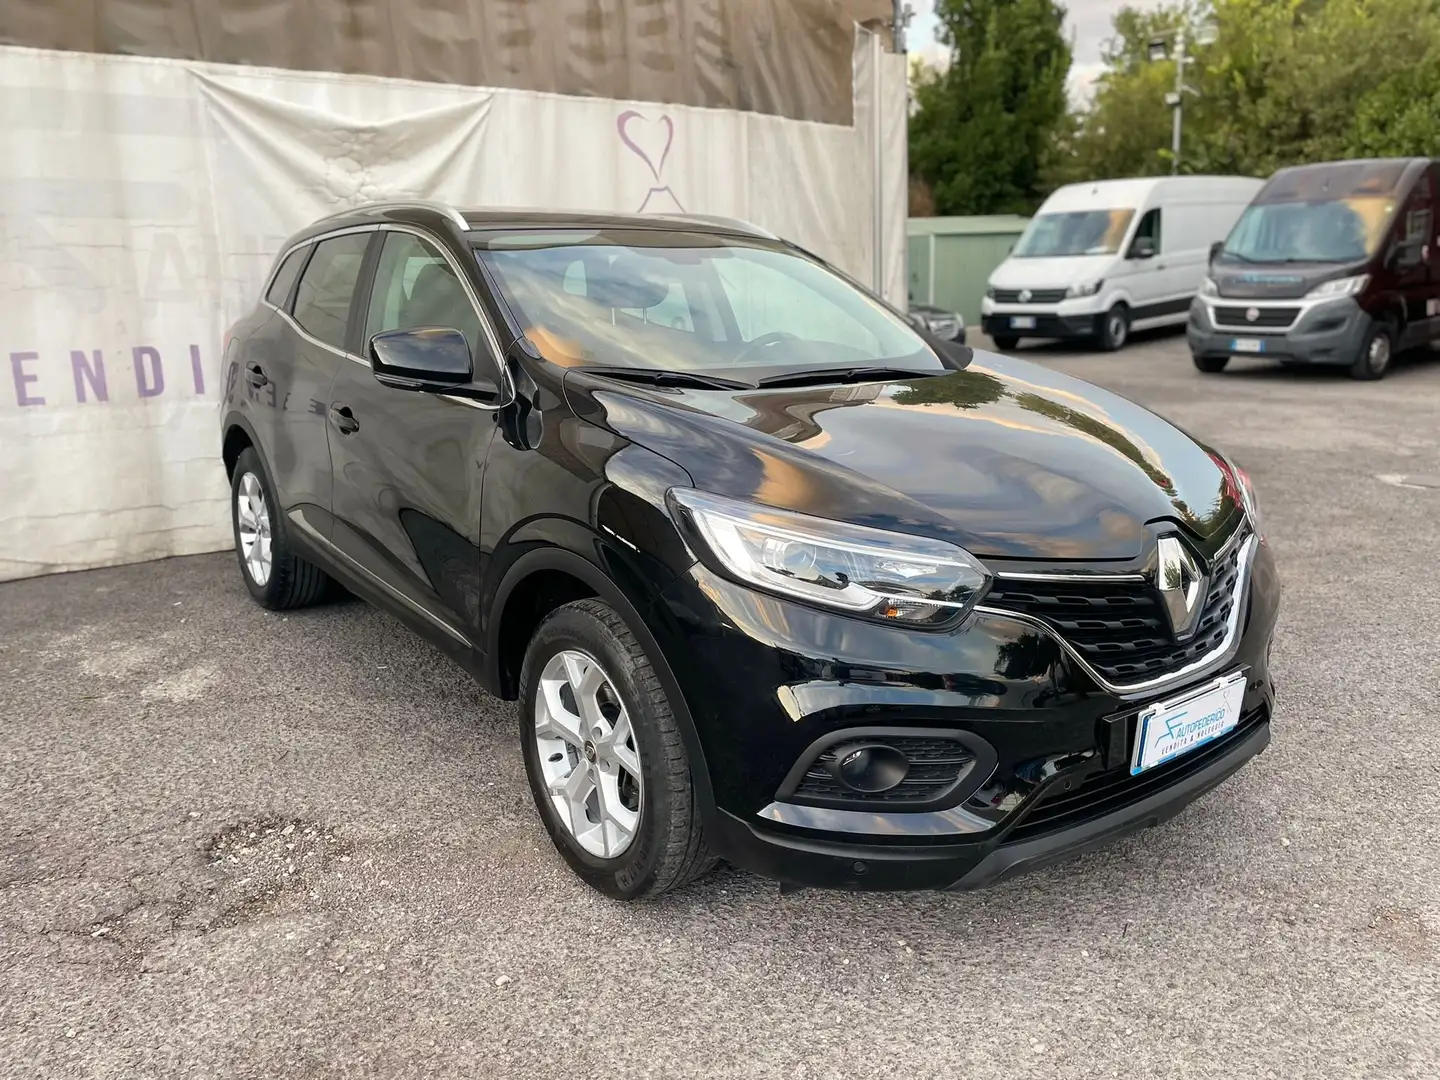 usato Renault Kadjar SUV/Fuoristrada/Pick-up a Pompei - Napoli per €  18.999,-